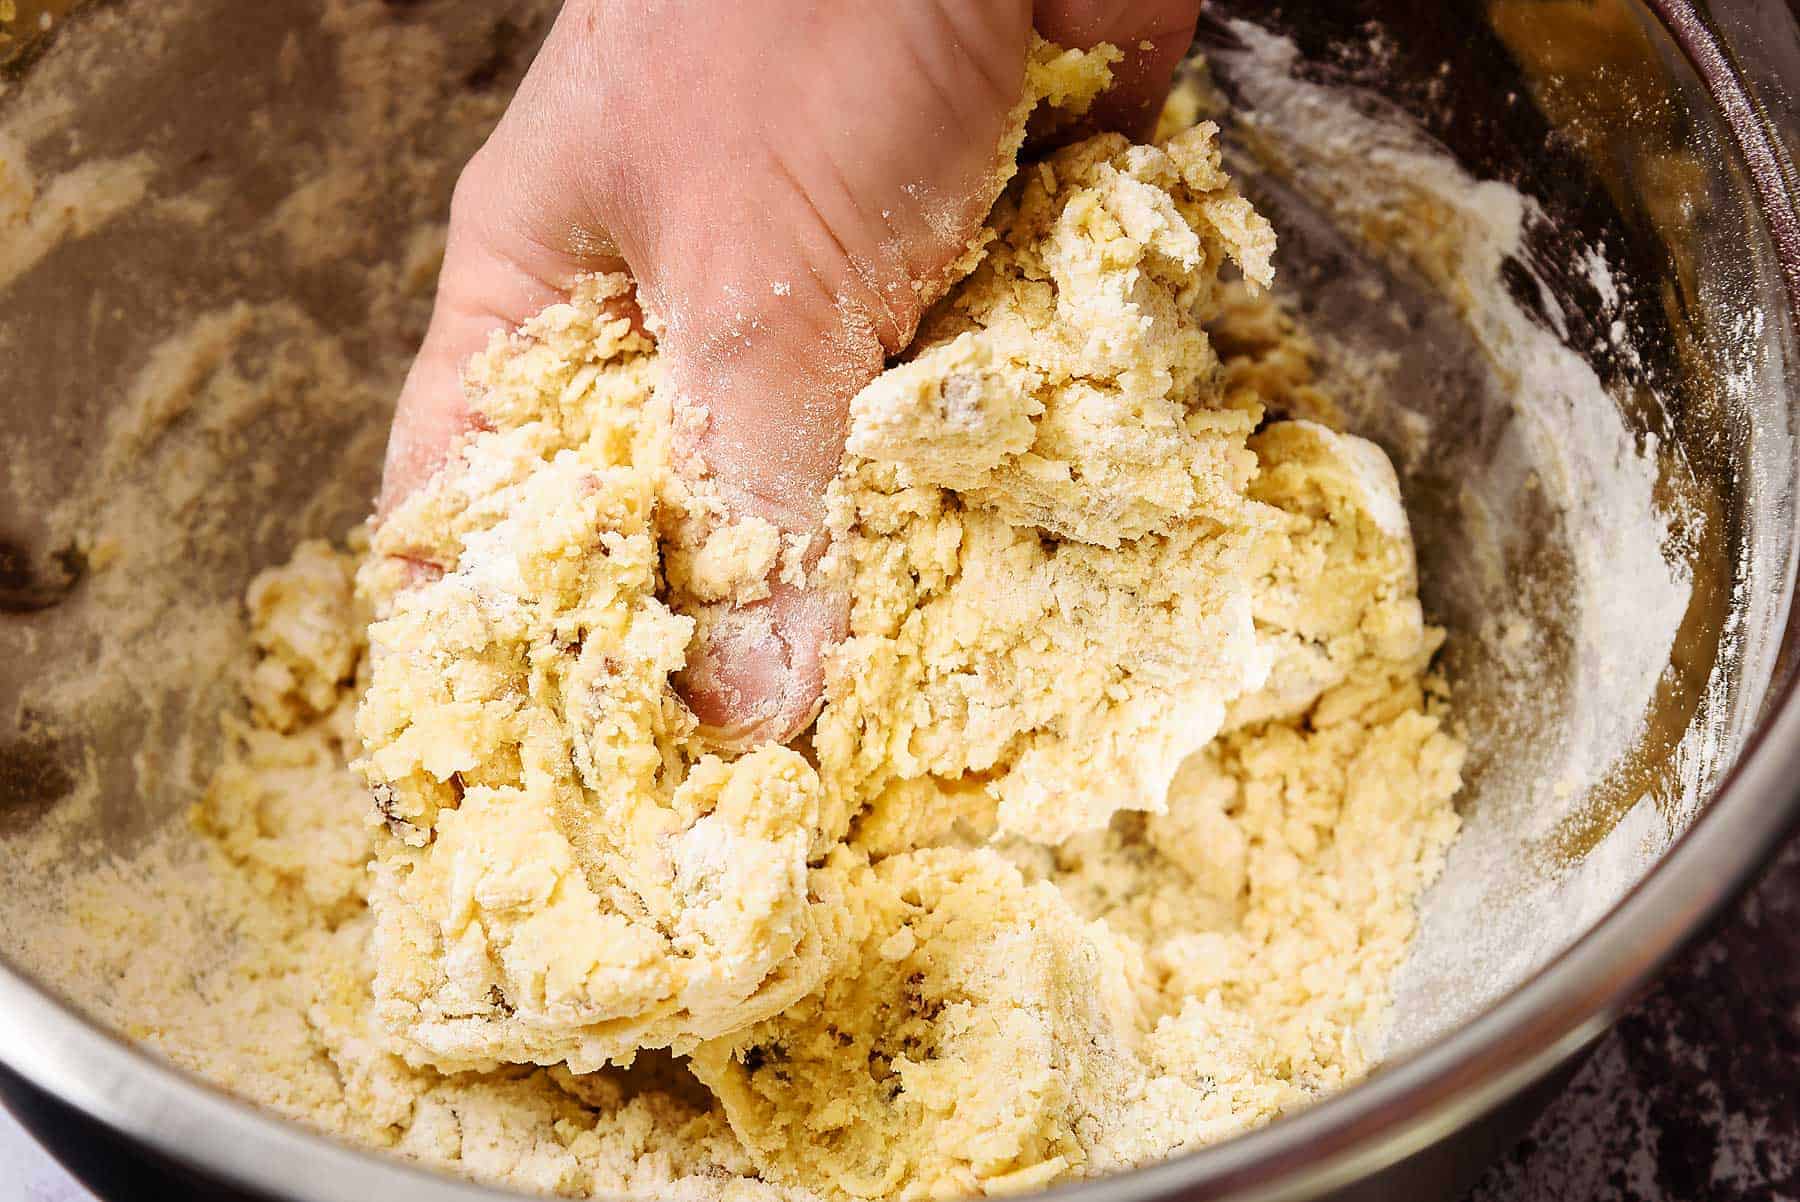 Bringing the dough together